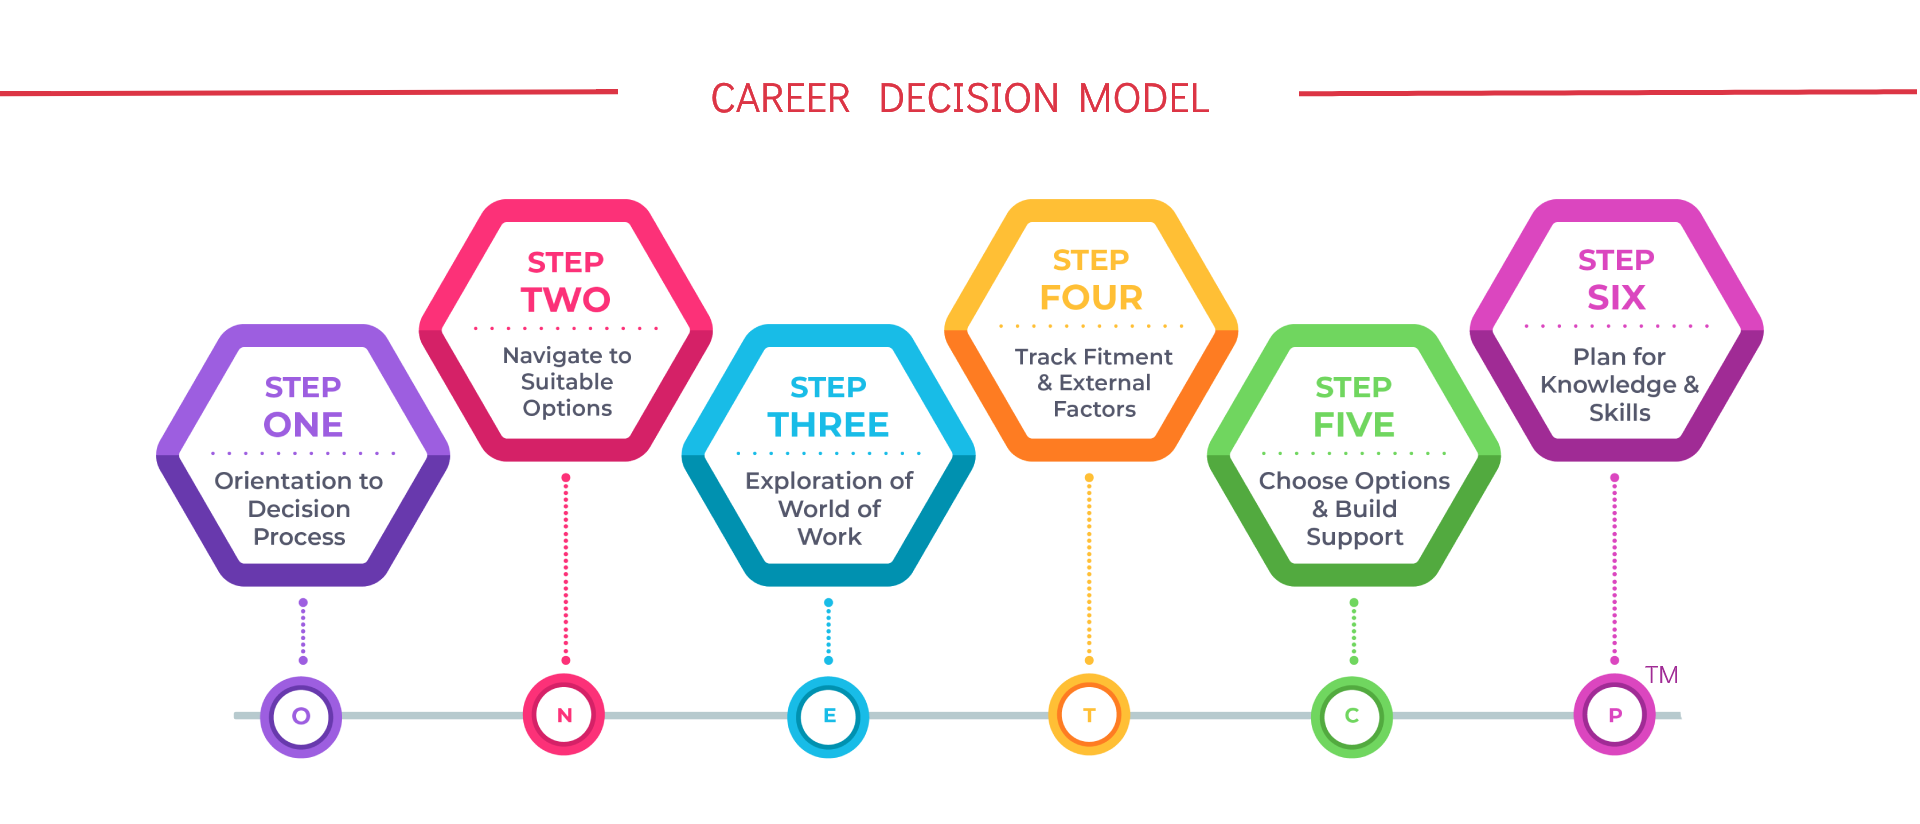 tucareers career test career decision model